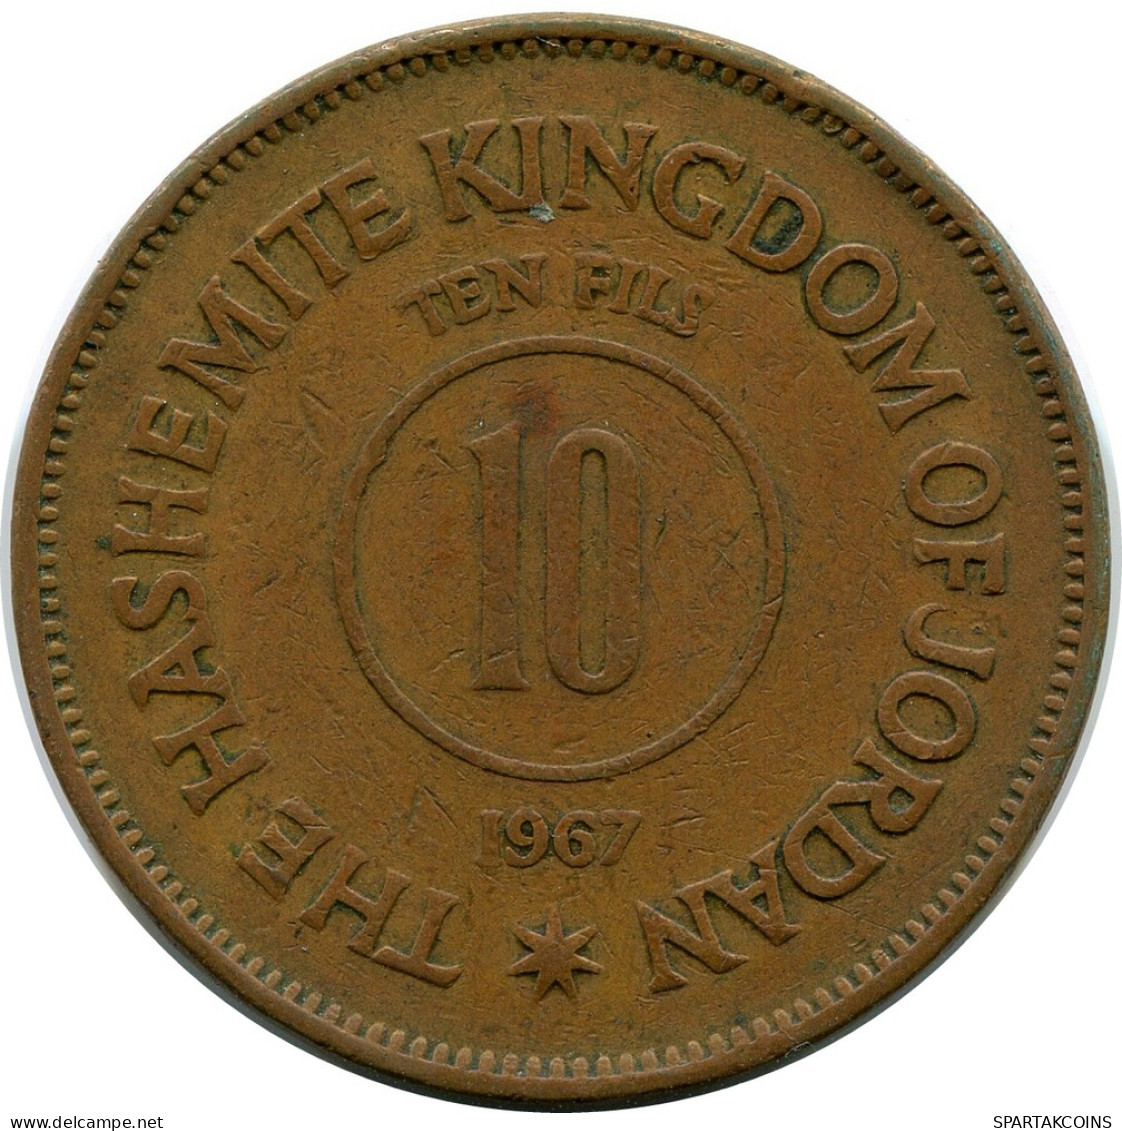 10 FILS 1967 JORDAN Coin #AP112.U - Jordanien